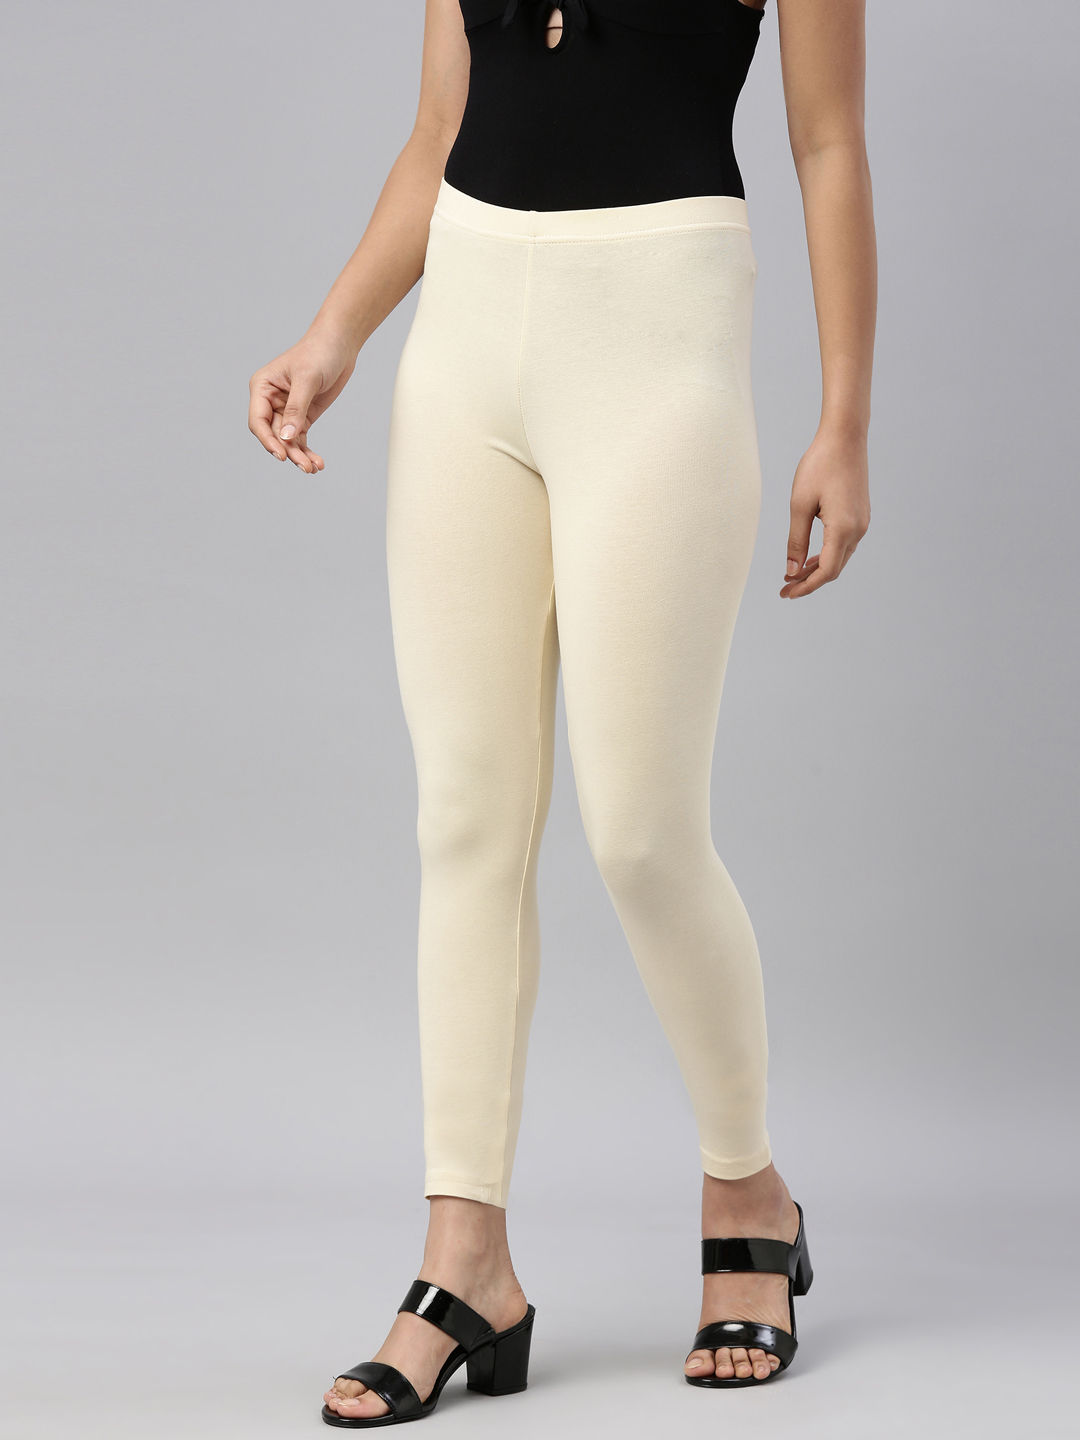 Buy B S Women's Slim Fit 3/4 Leggings in Combo Set Pac of 2 (XXL, Black-Cream  Color) at Amazon.in